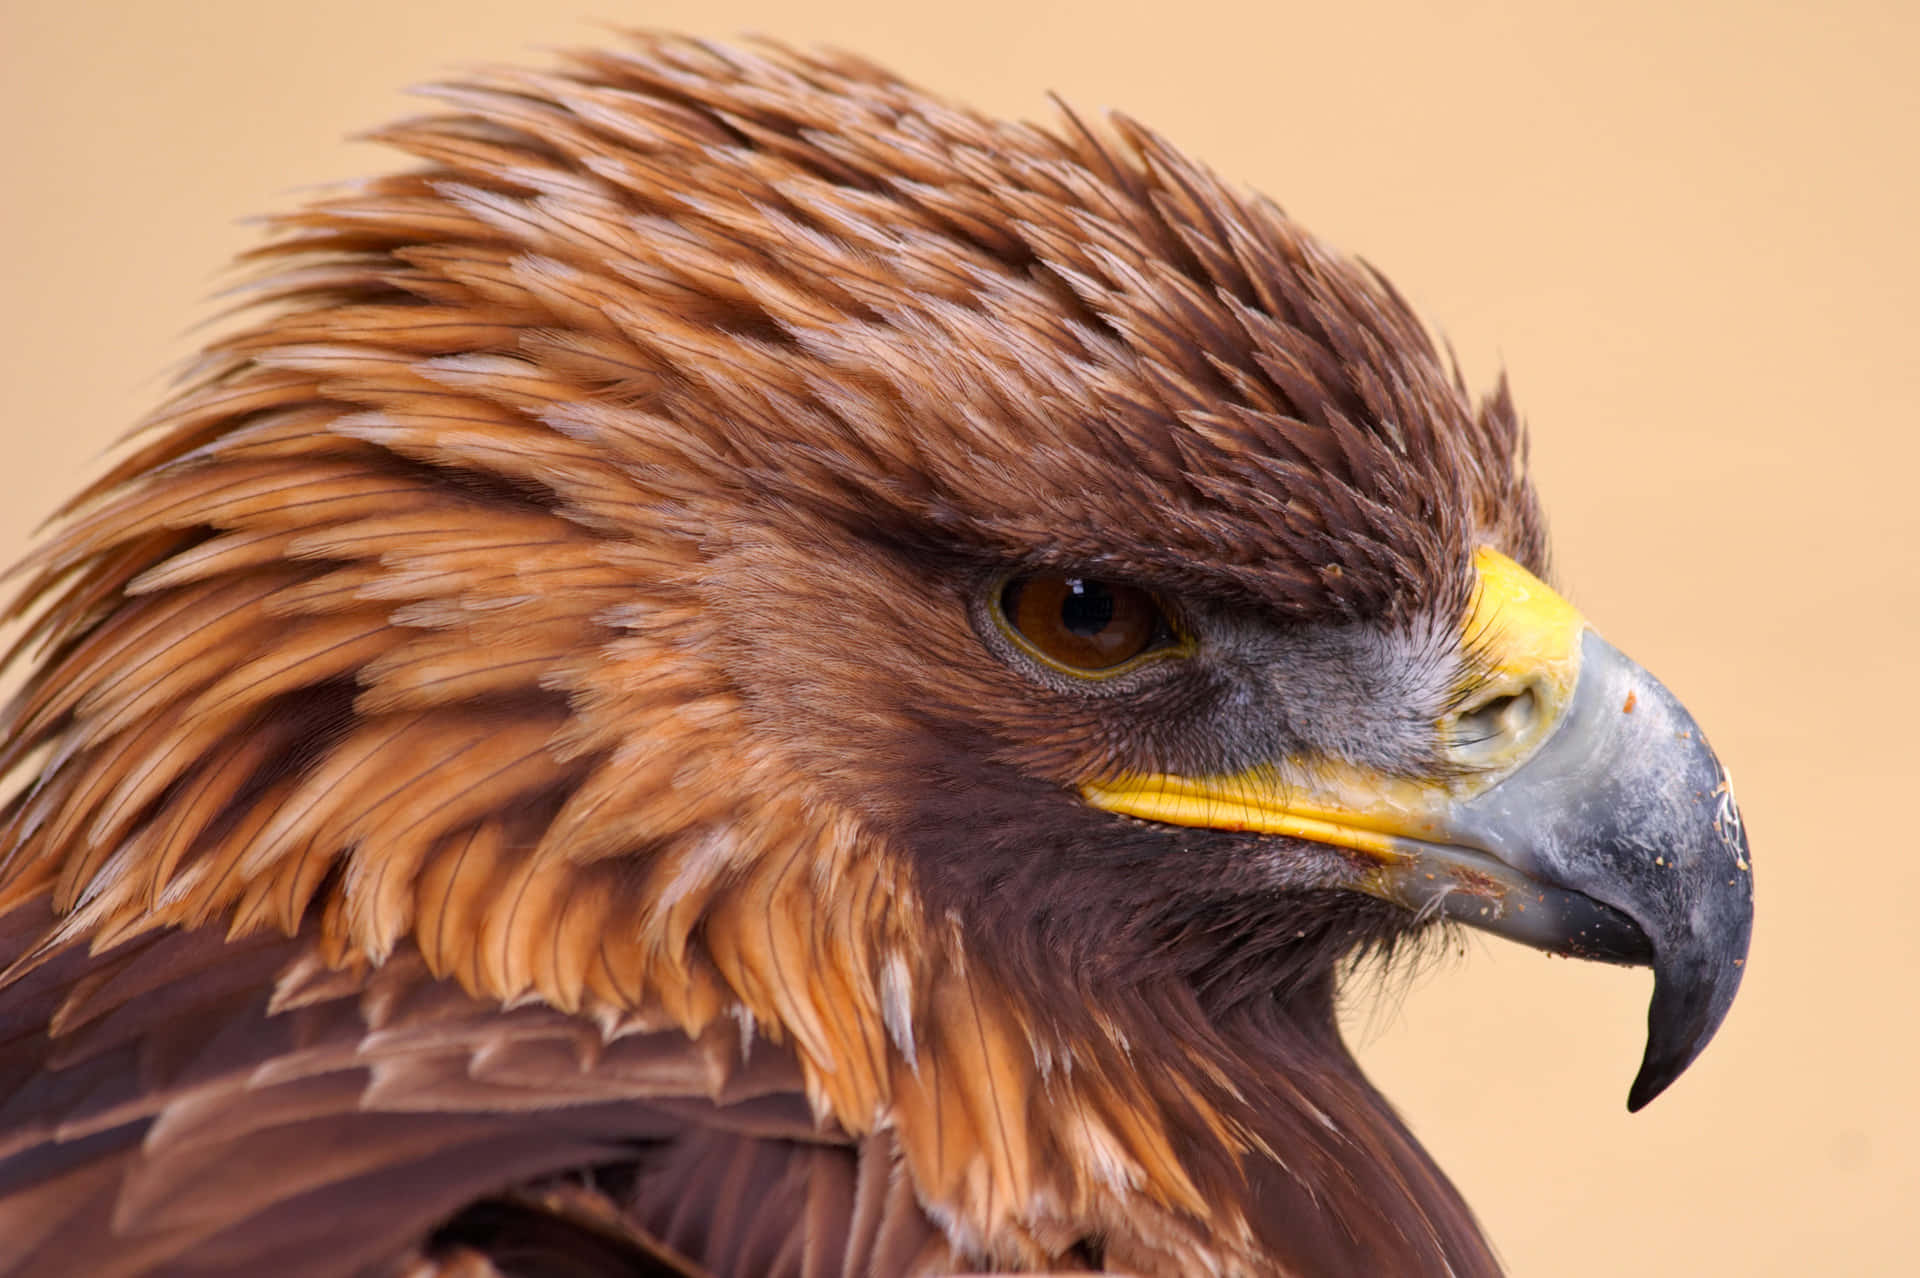 Majestic golden eagle soaring over the mountain ridge